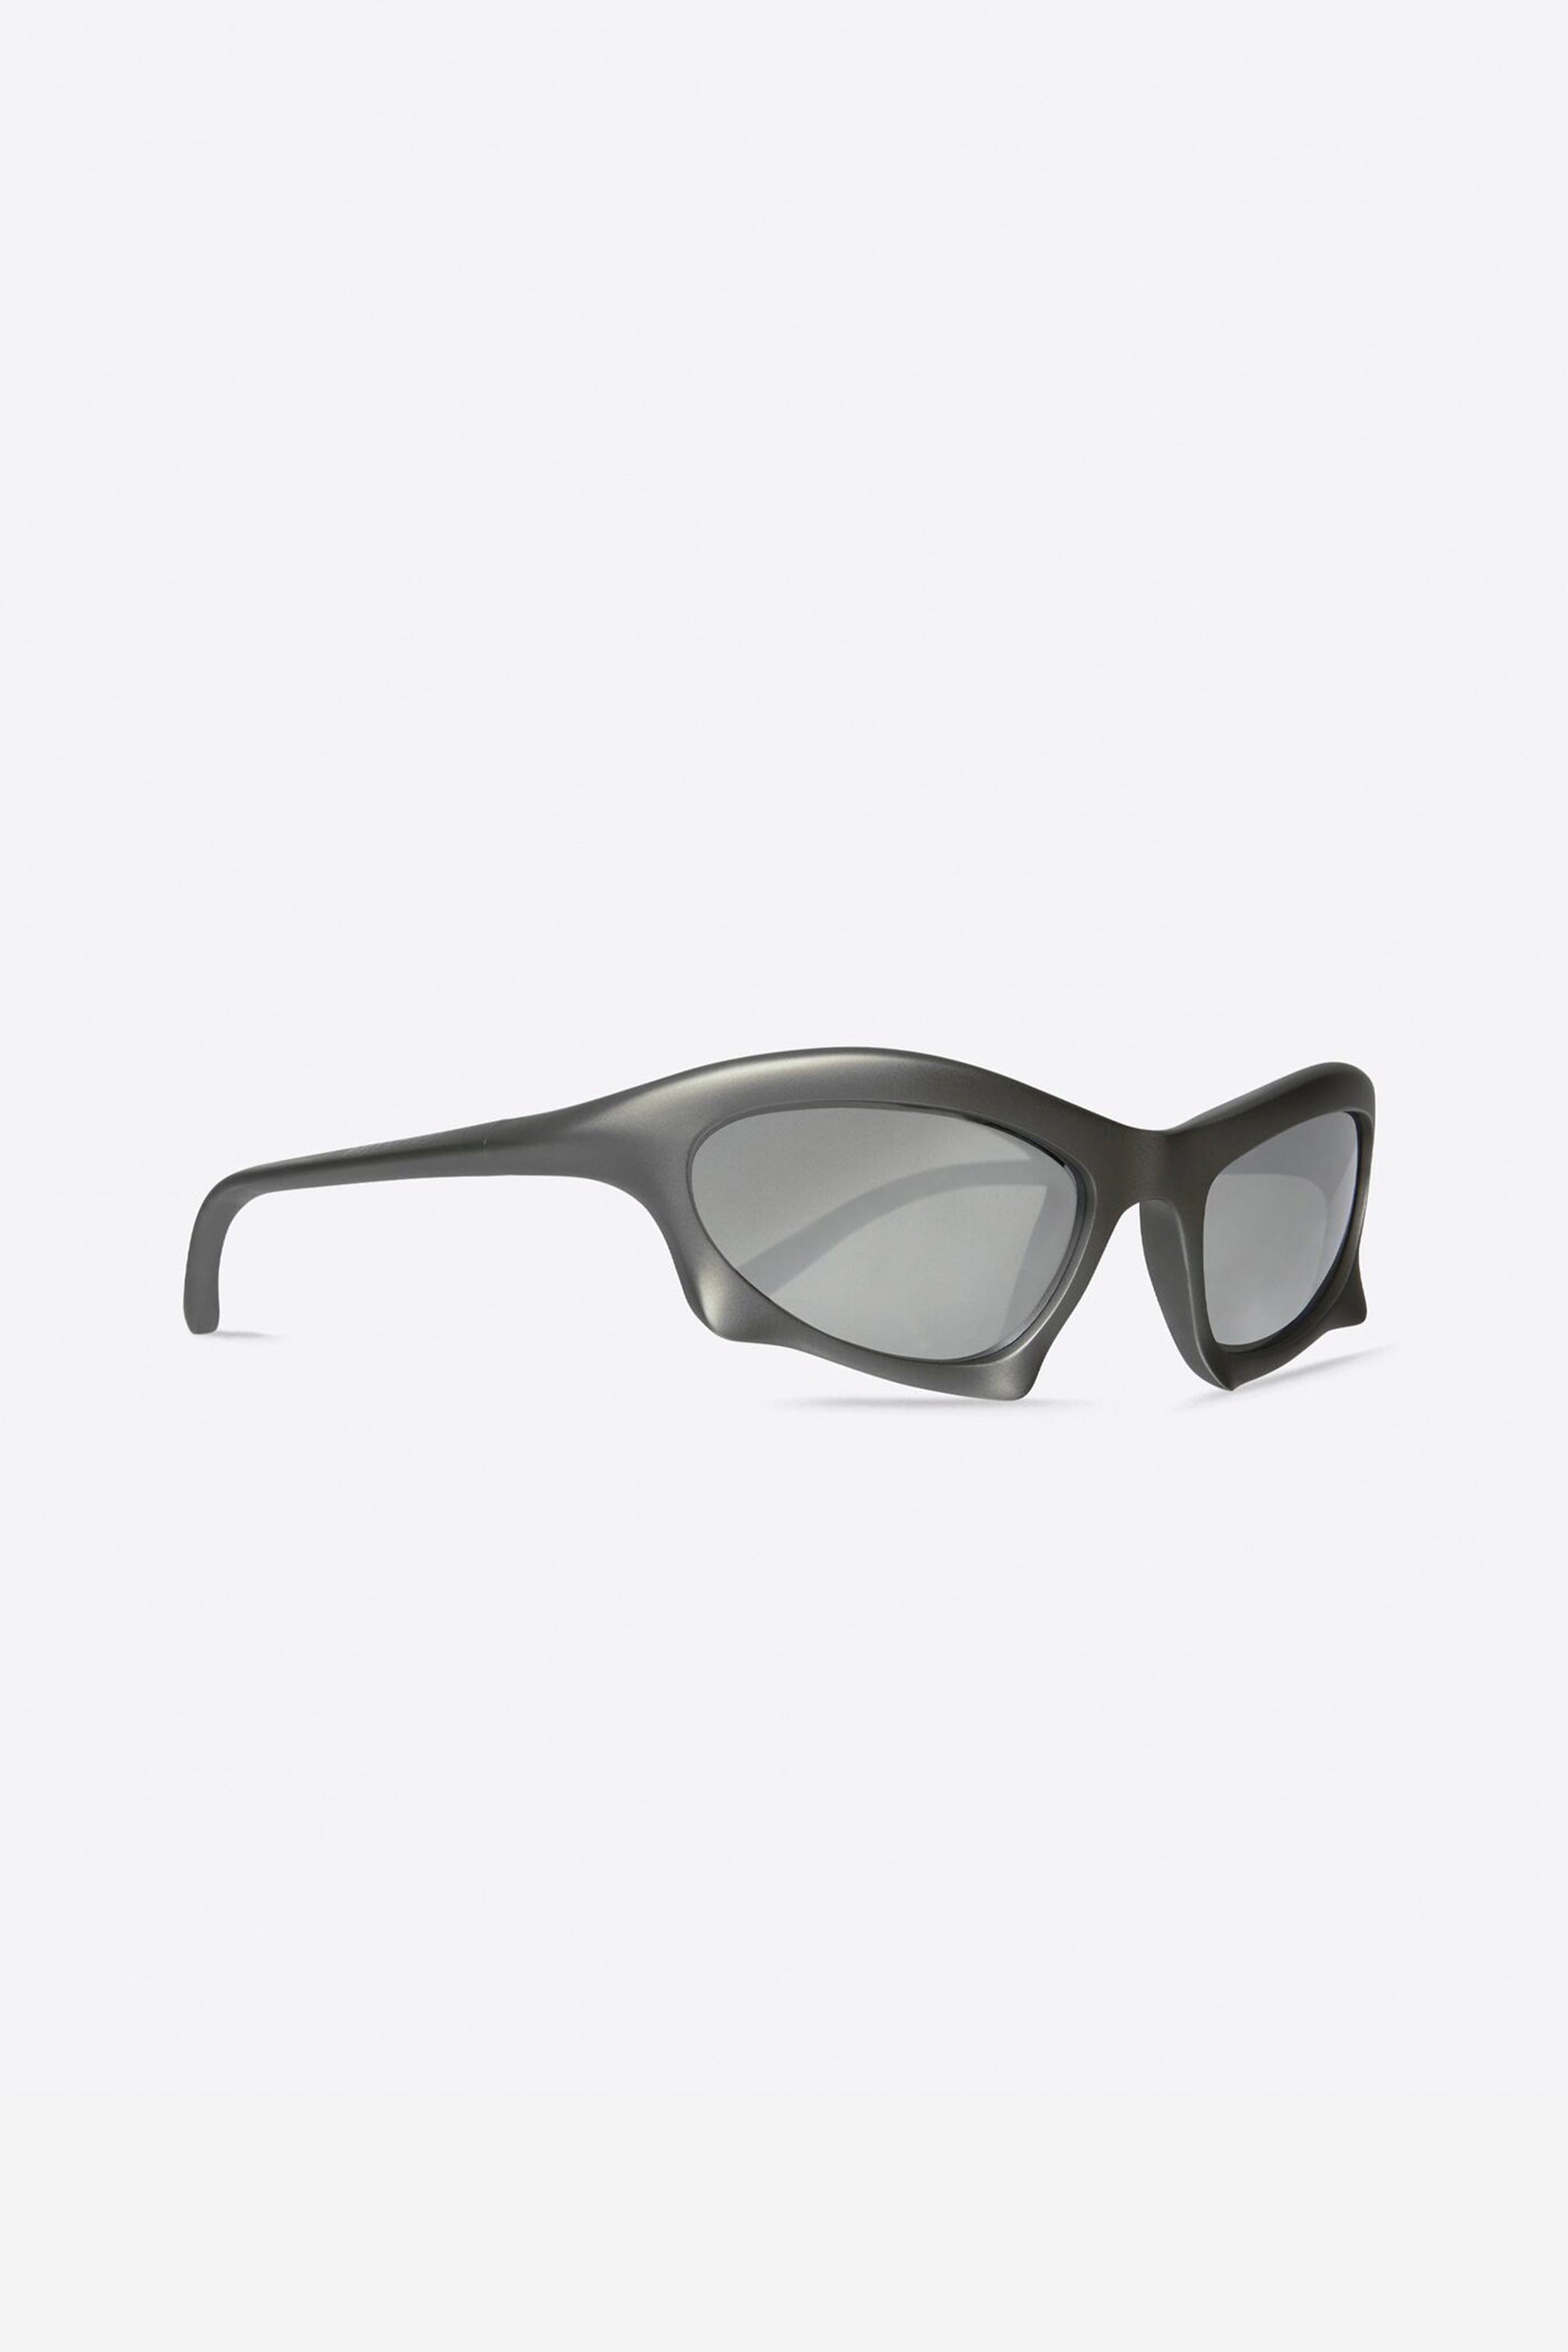 Balenciaga Bat rectangle sunglasses in silver - Eyewear Club